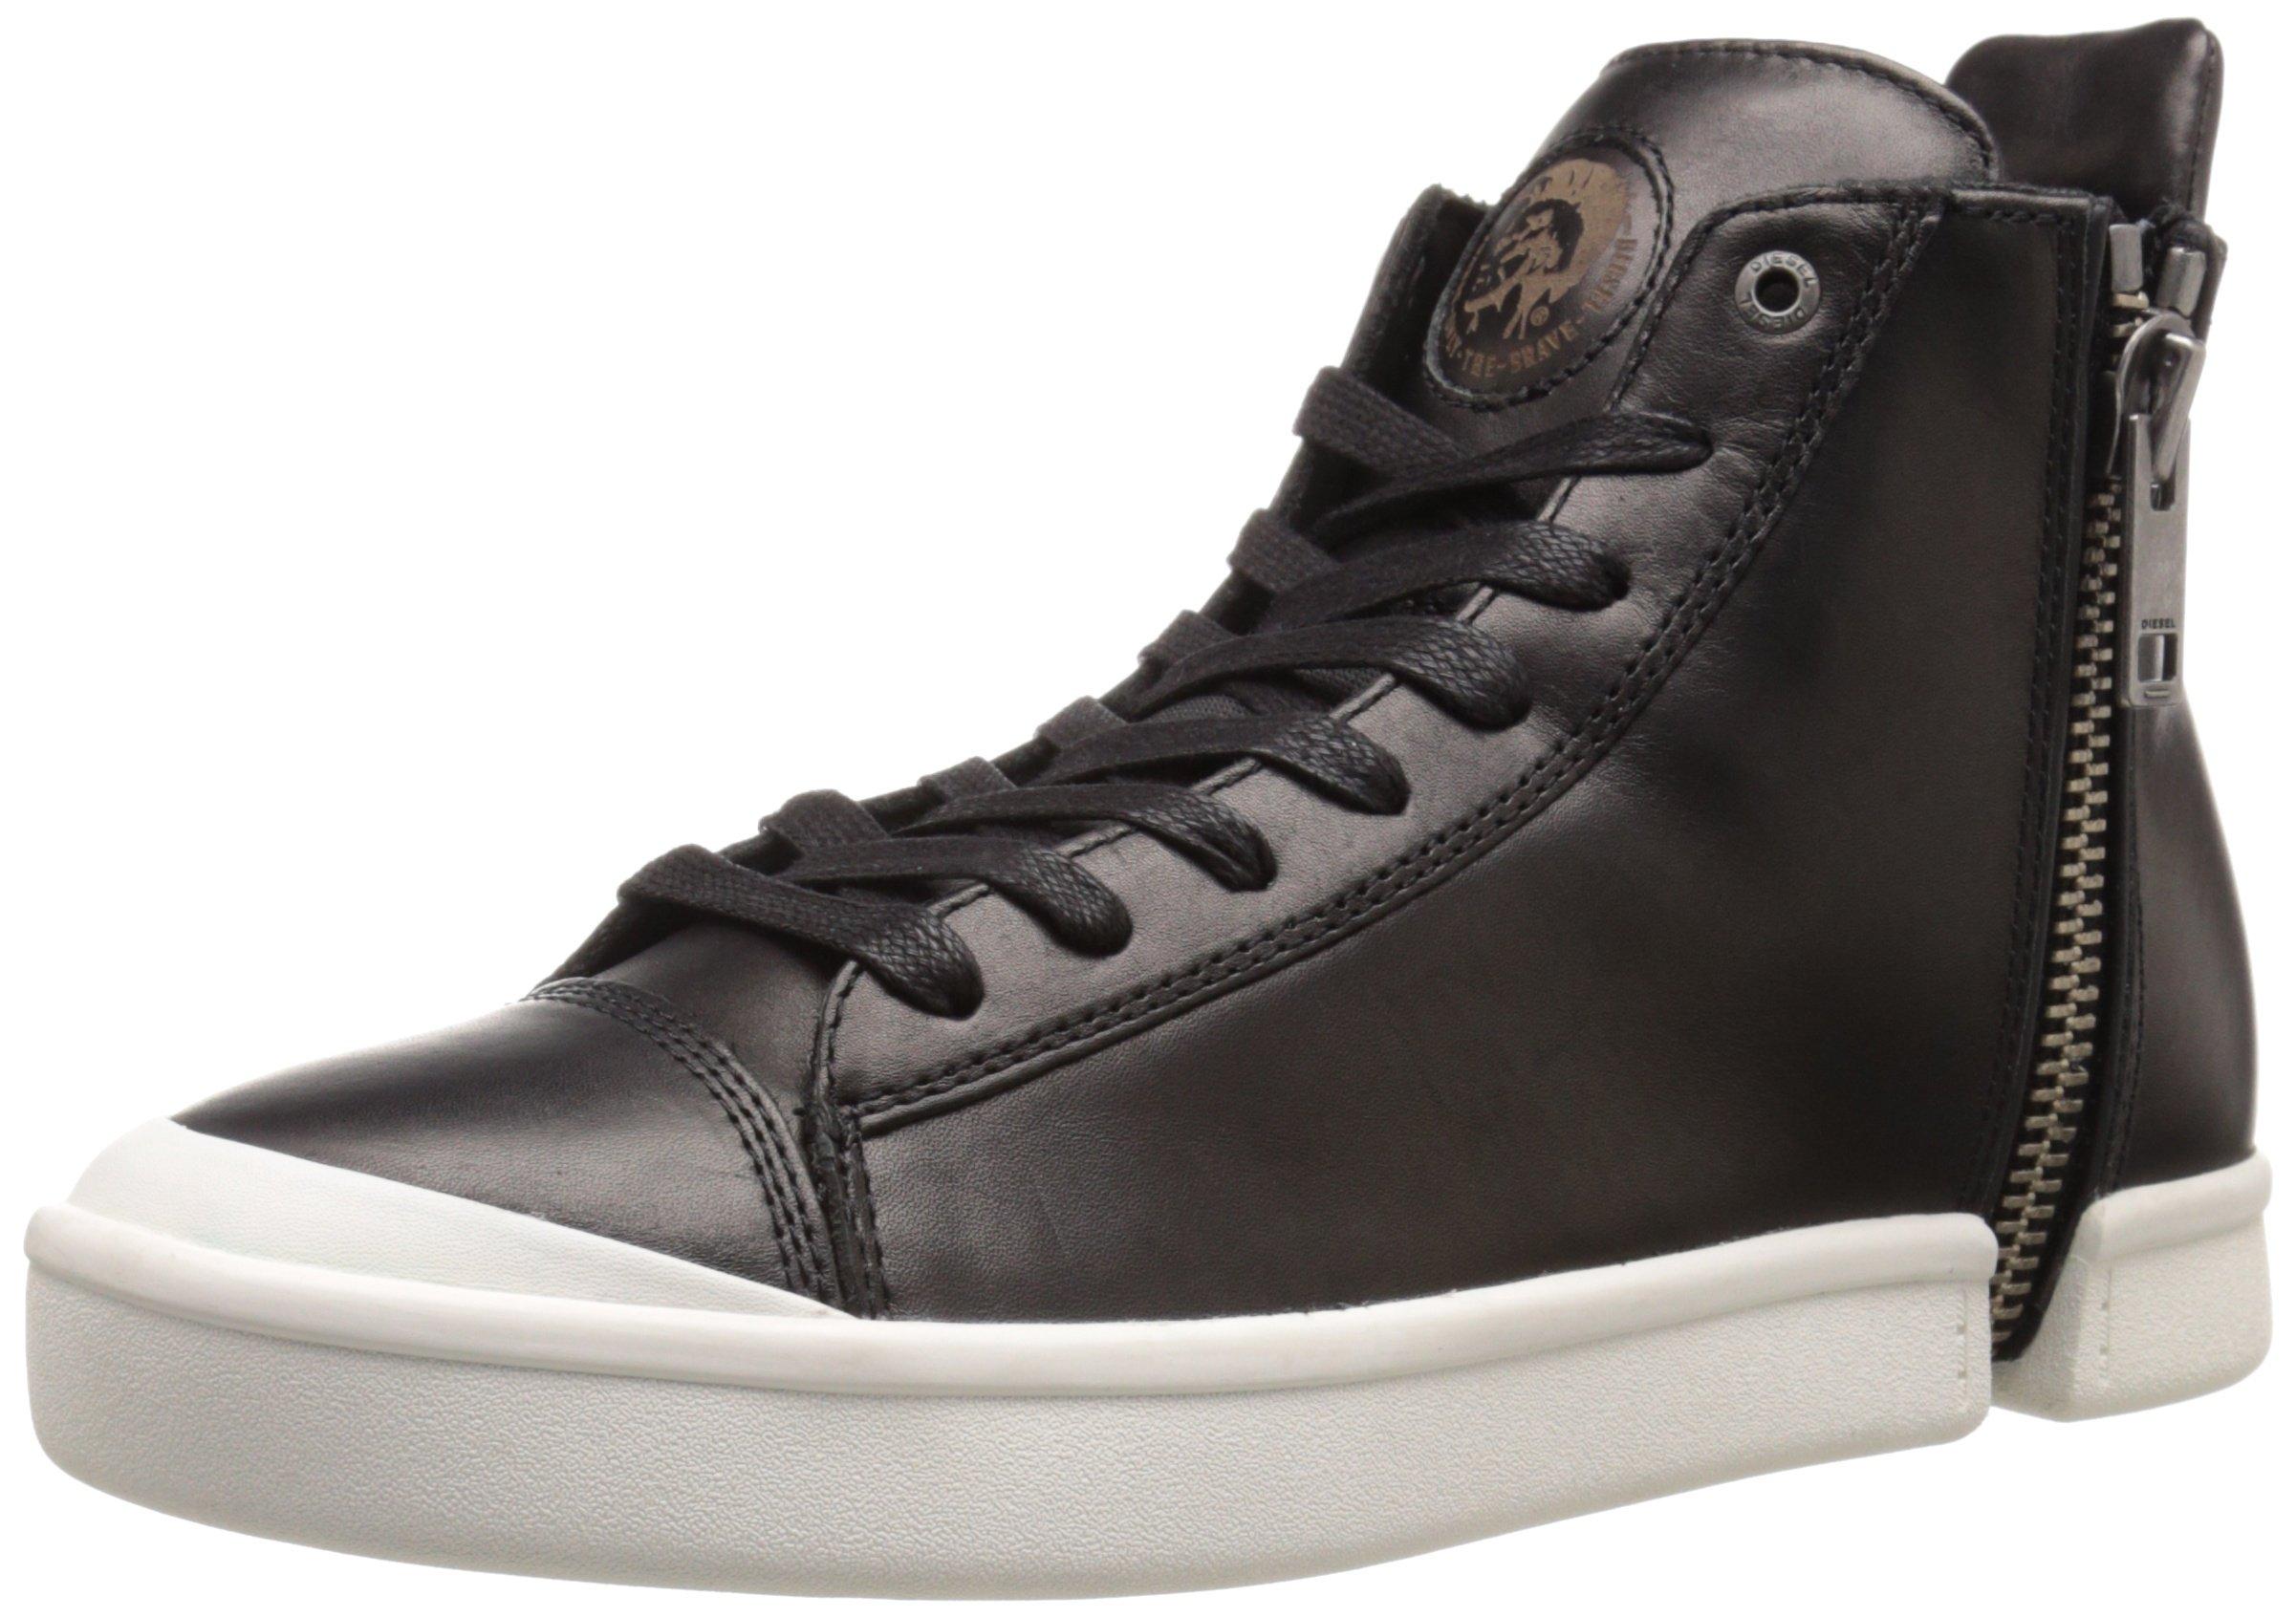 DIESEL Leather S-nentish Fashion Sneaker in Black for Men - Lyst